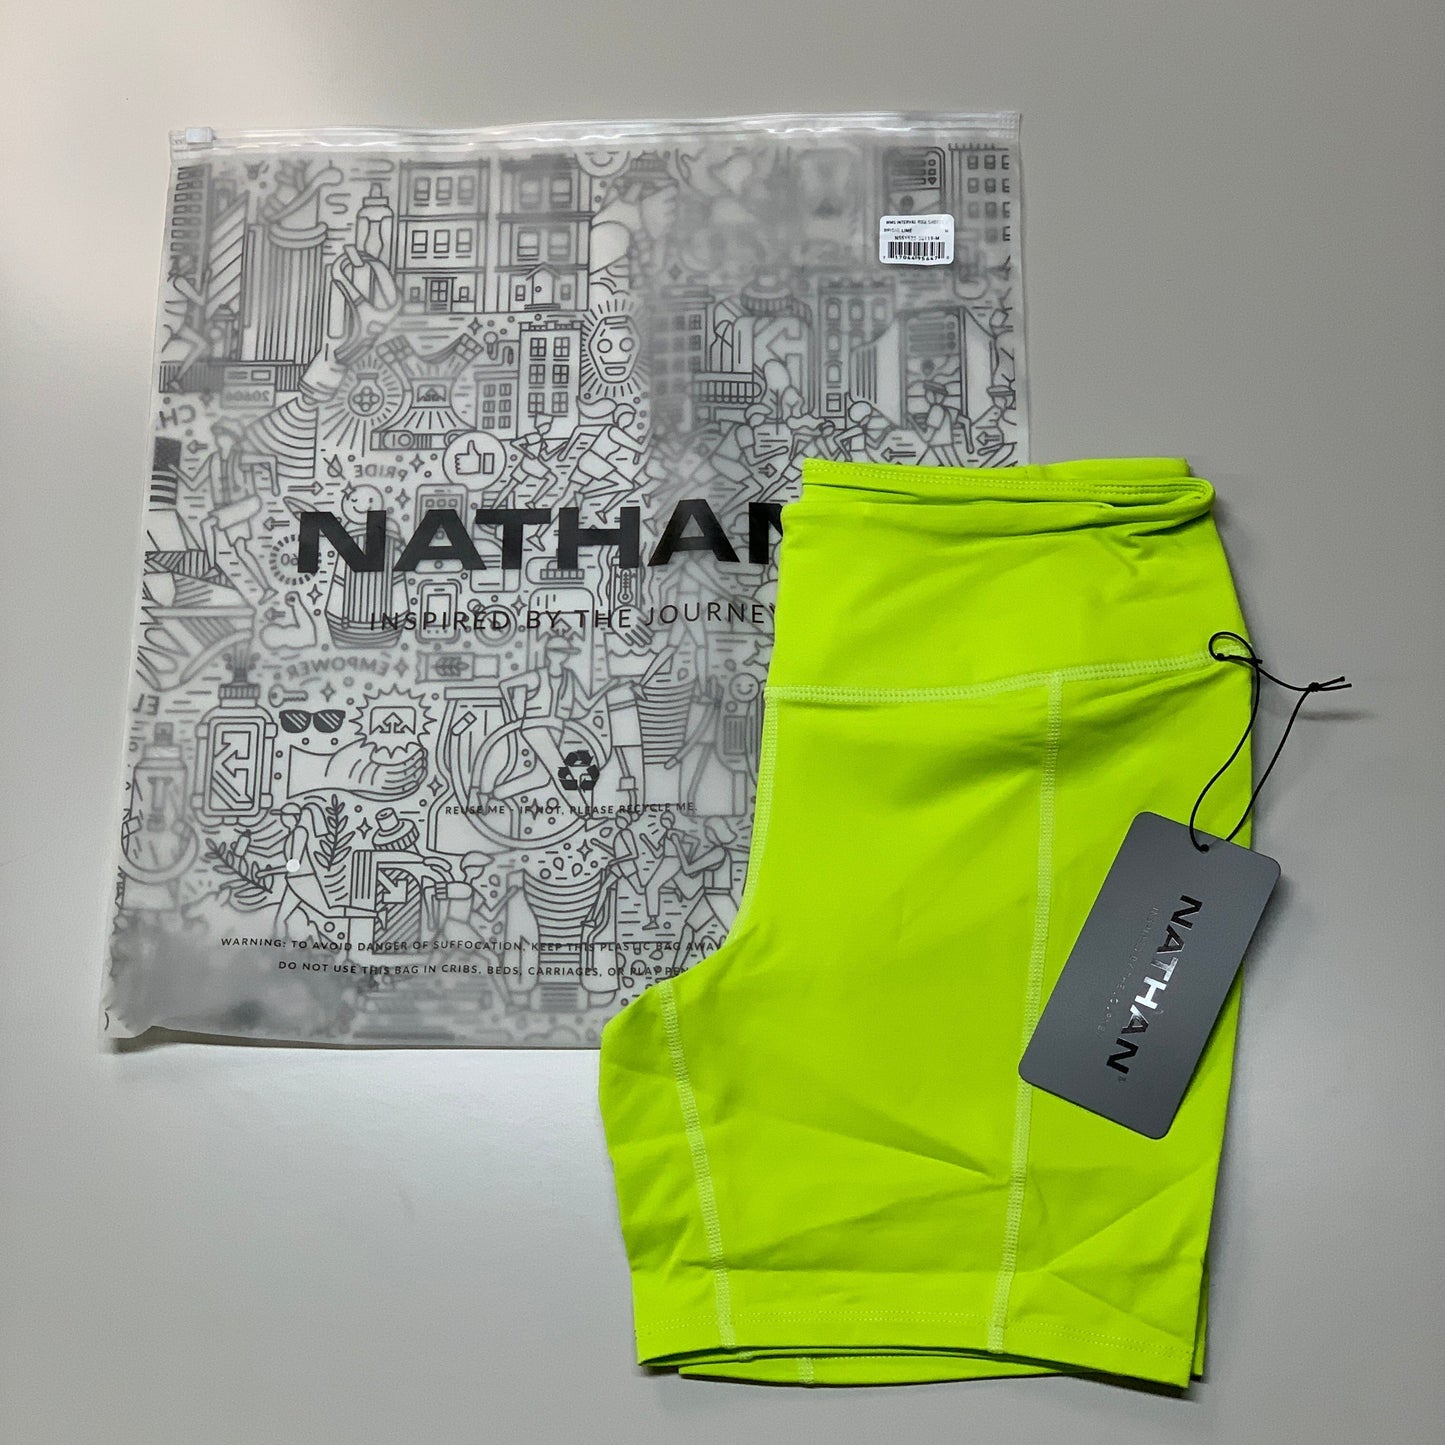 NATHAN Interval 6" Inseam Bike Short Women's Bright Lime Sz XL NS51520-50119-XL